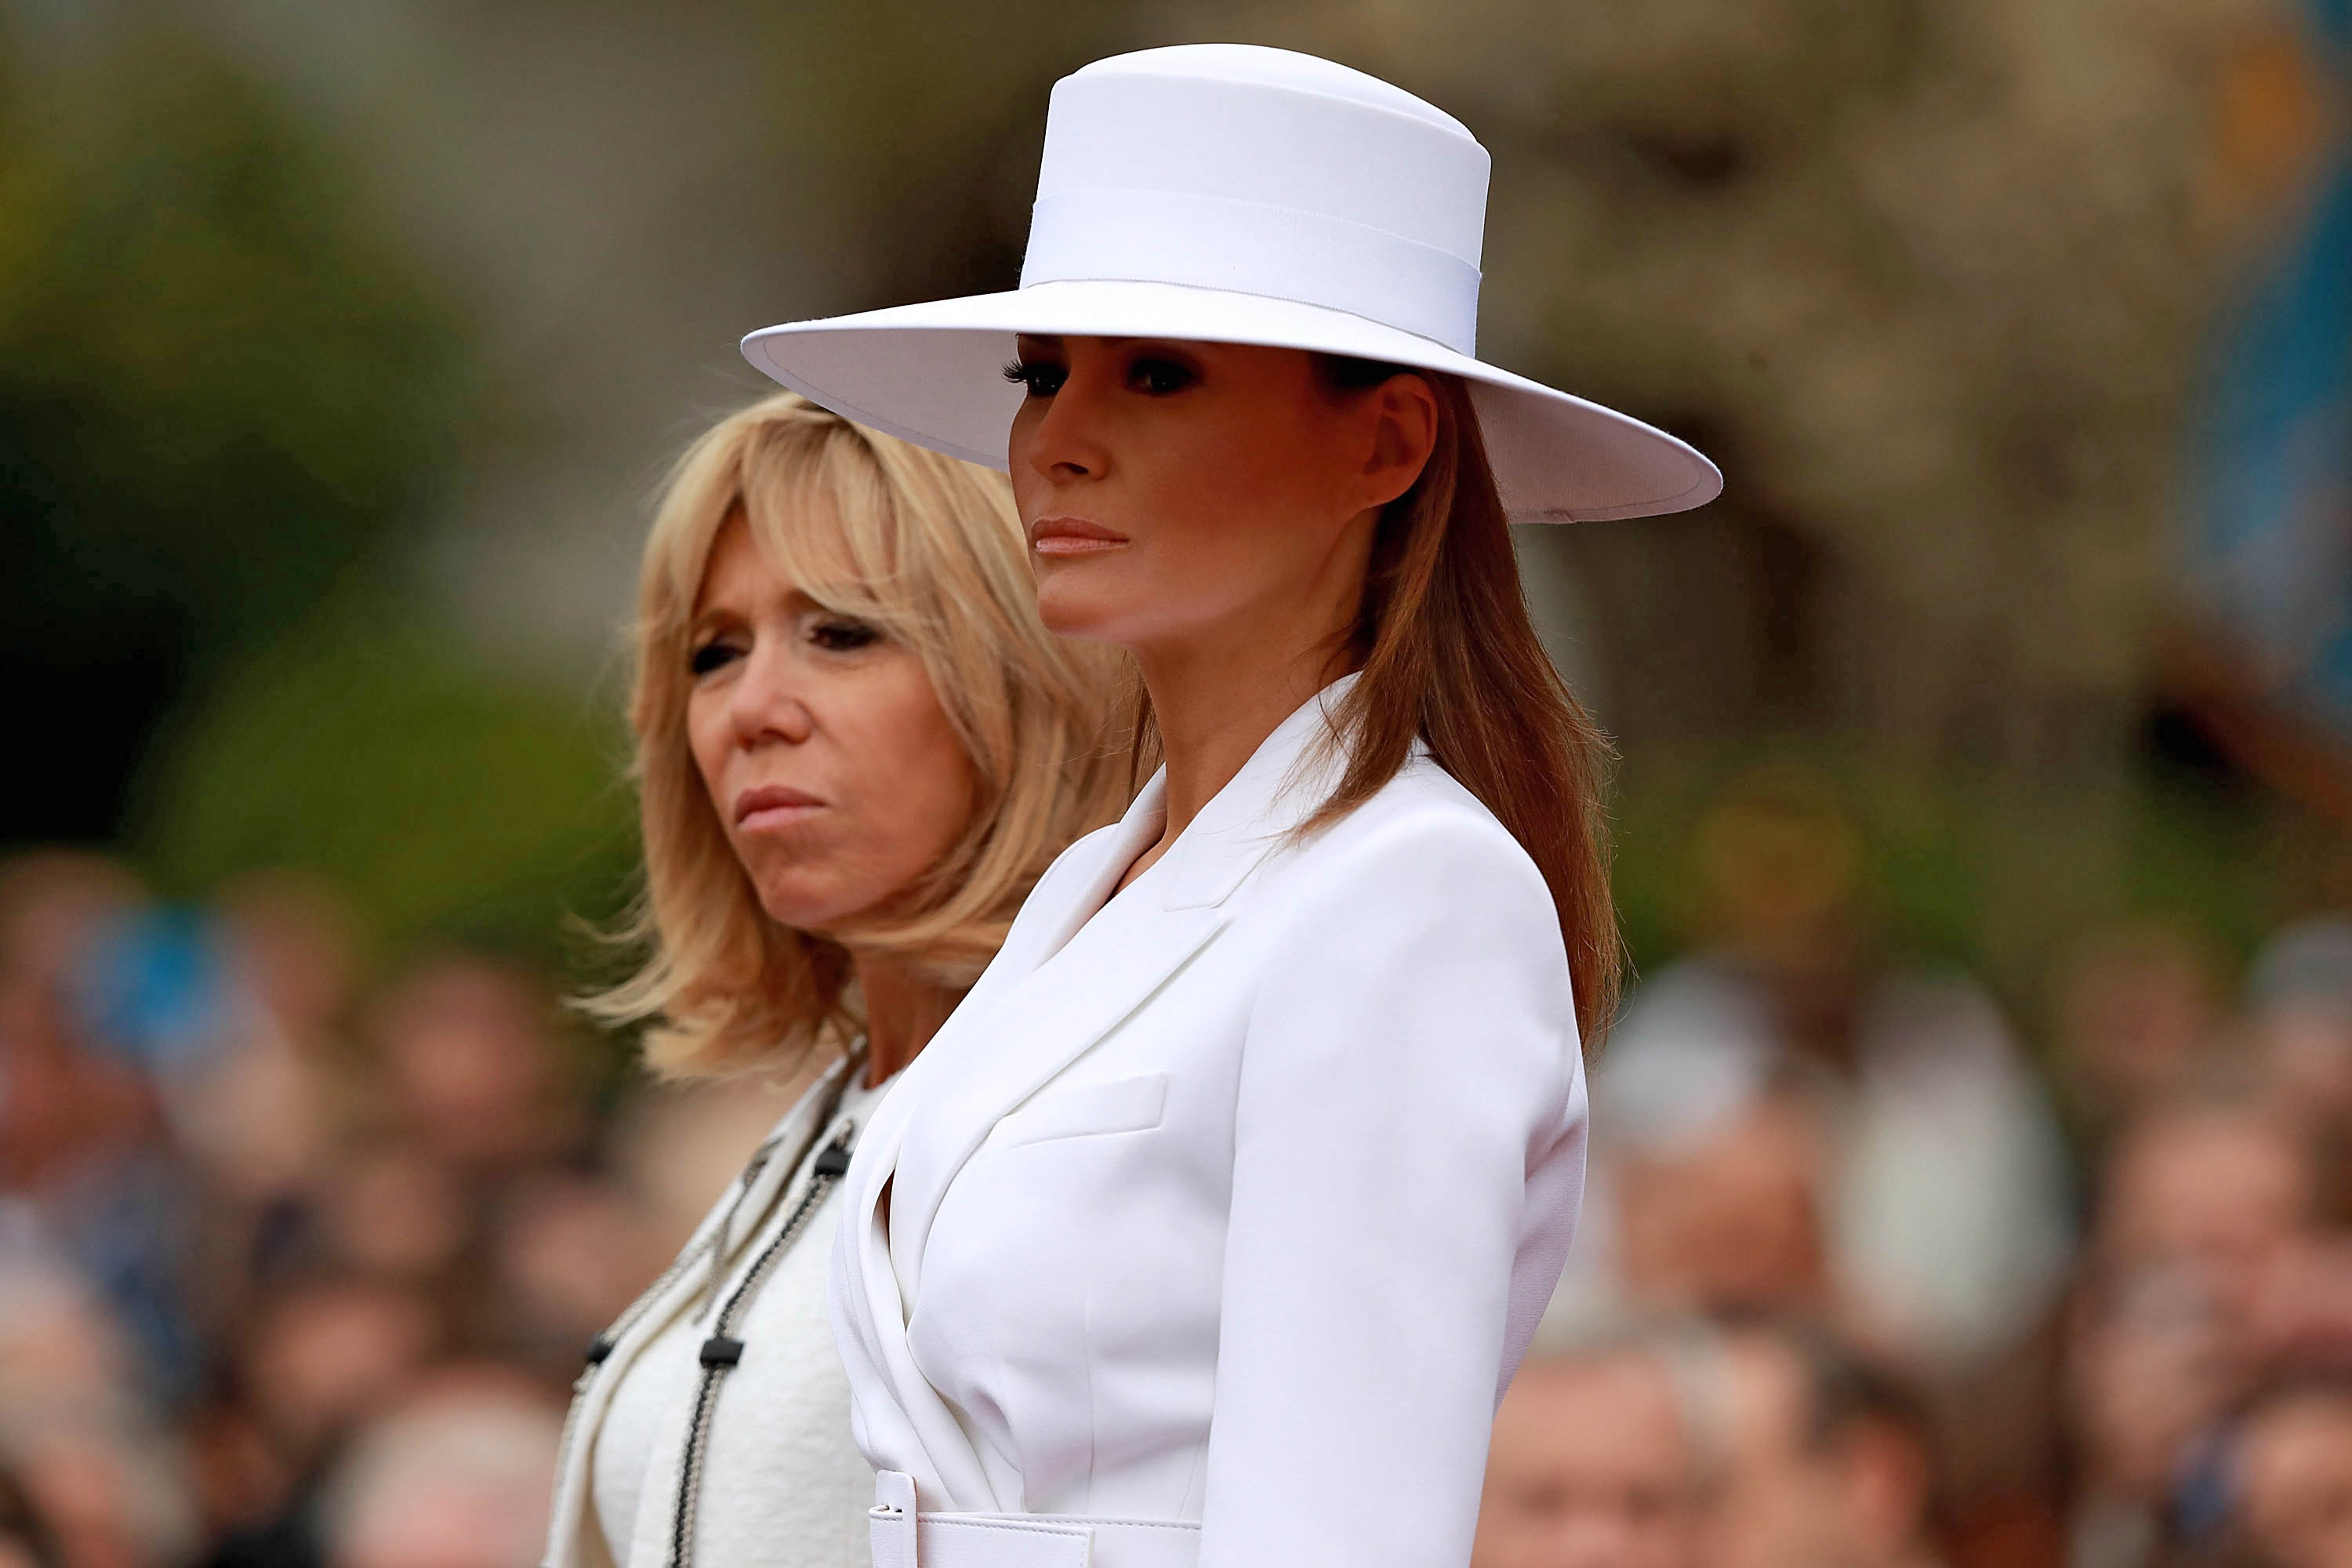 Armchair Fashionistas Had Takes on Melania's Giant Hat: Like 'She